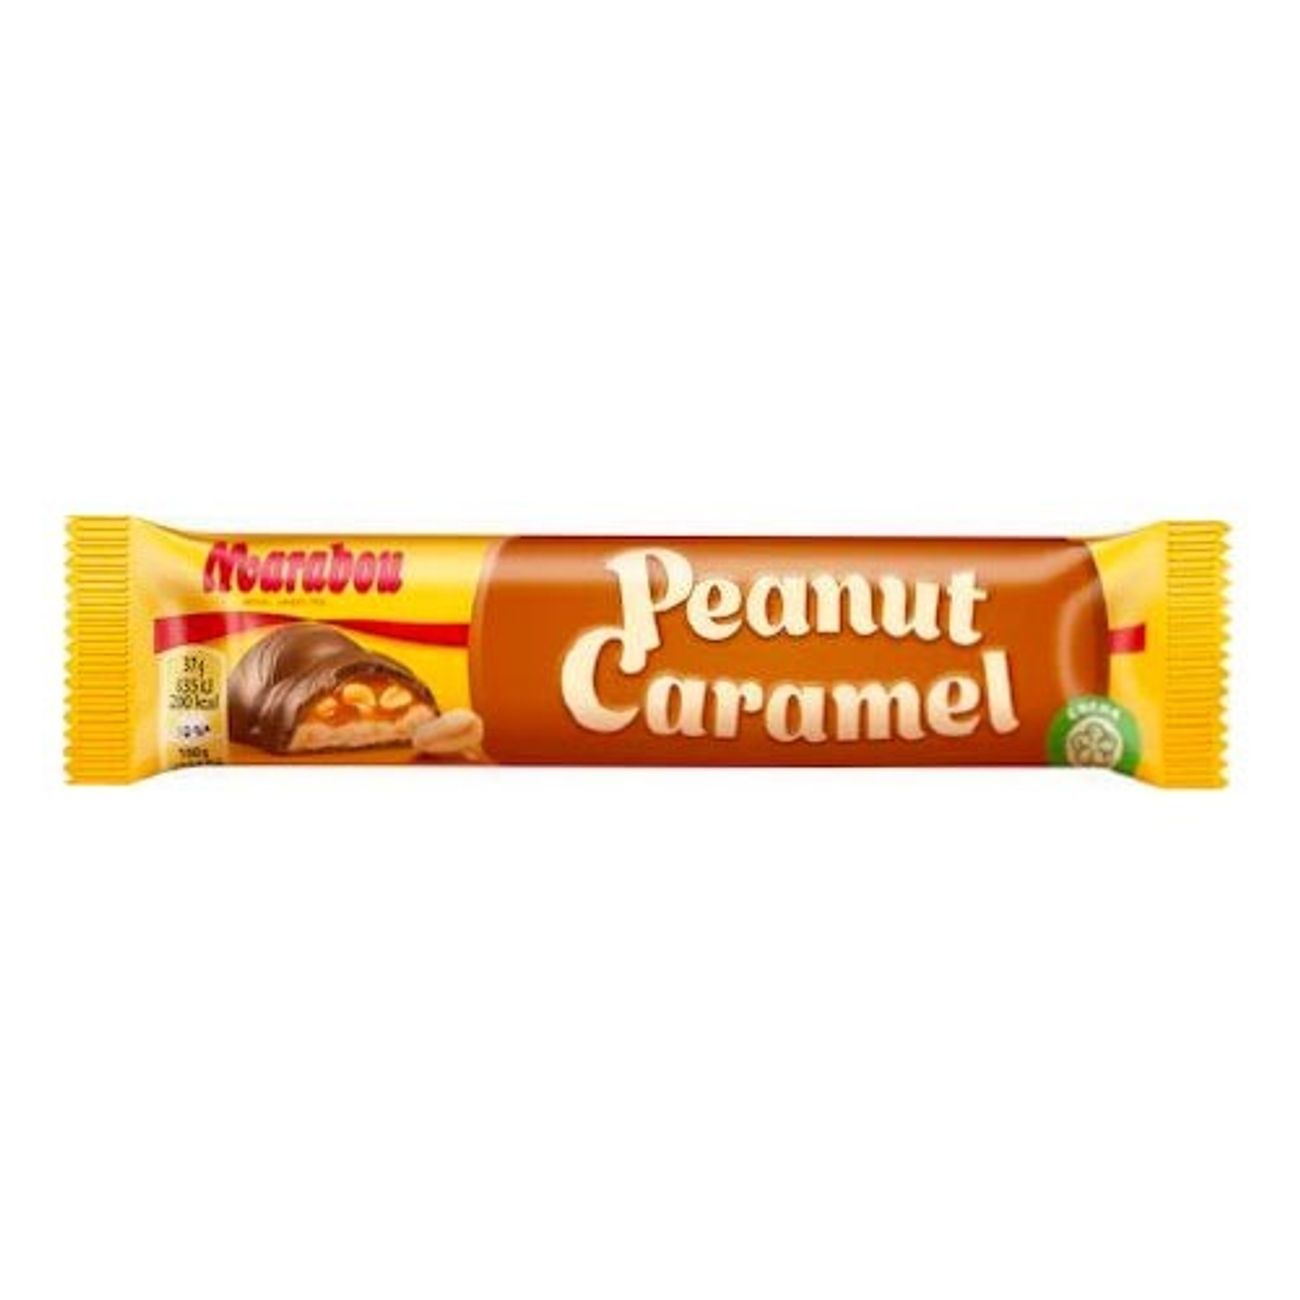 marabou-peanut-caramel-chokladbit-1